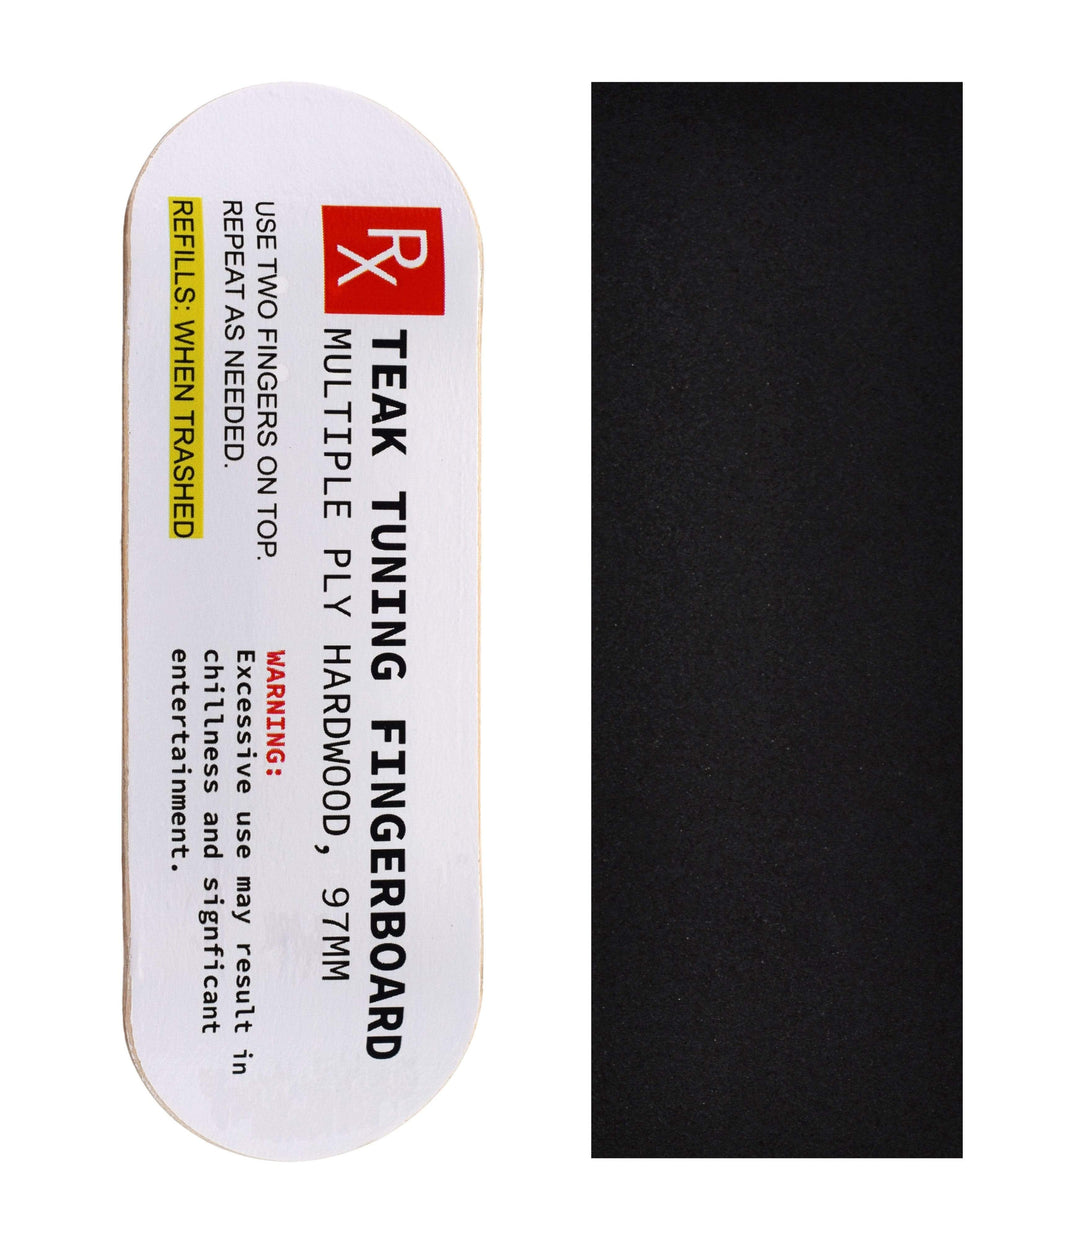 Teak Tuning Heat Transfer Graphic Wooden Fingerboard Deck, "Teak Prescription" - 32mm x 97mm